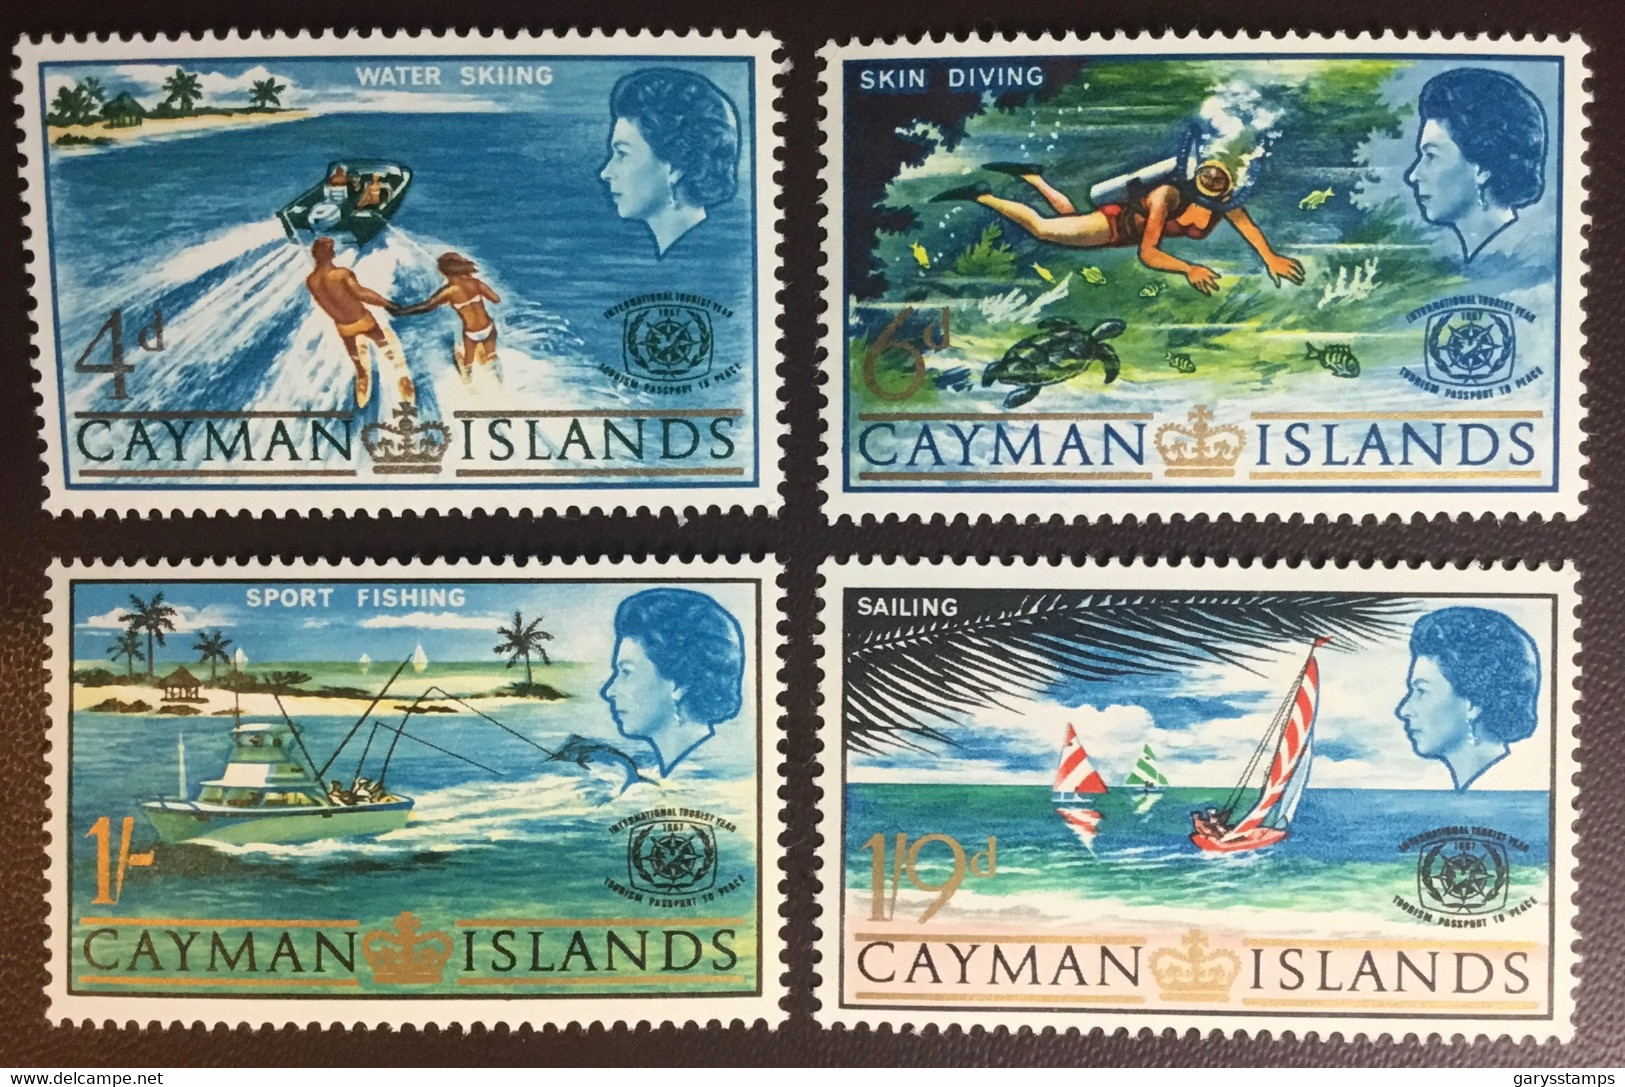 Cayman Islands 1967 Tourism Marine Life MNH - Cayman Islands